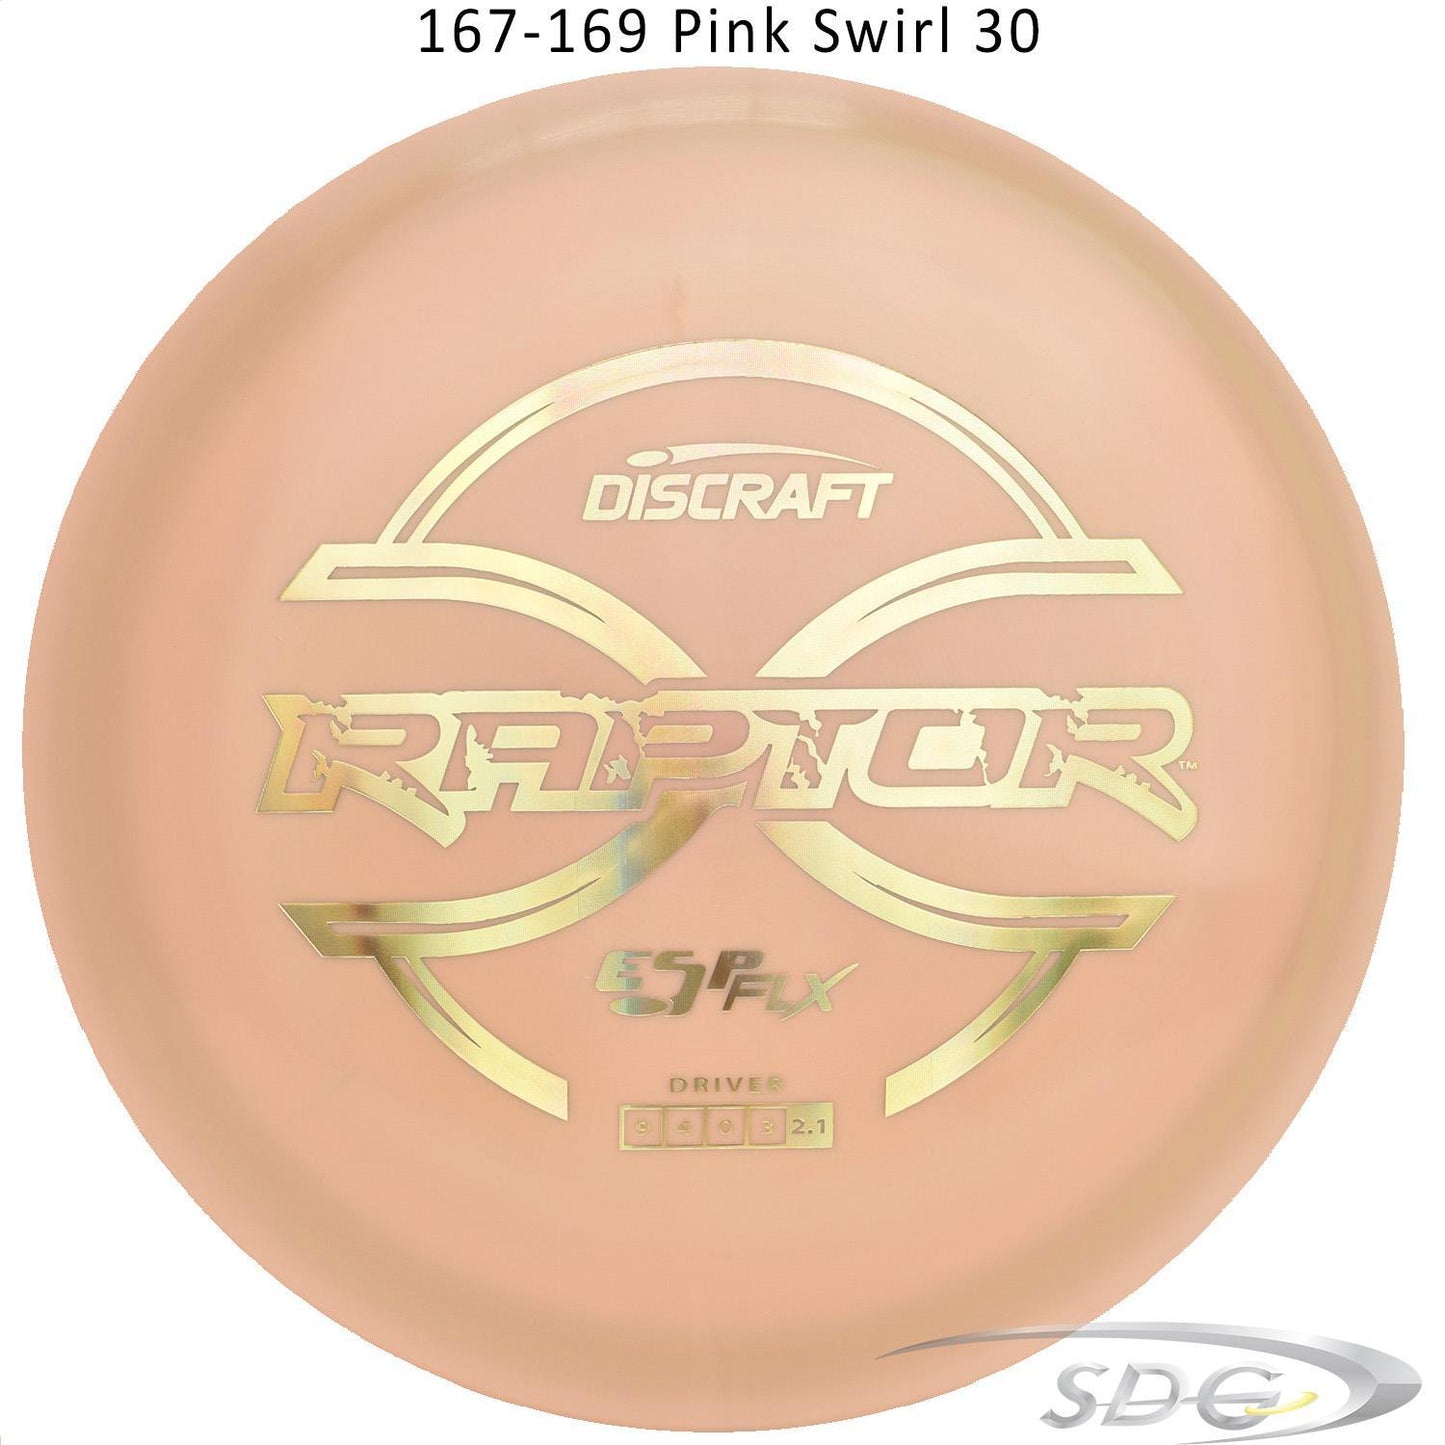 discraft-esp-flx-raptor-disc-golf-distance-driver 167-169 Pink Swirl 30 